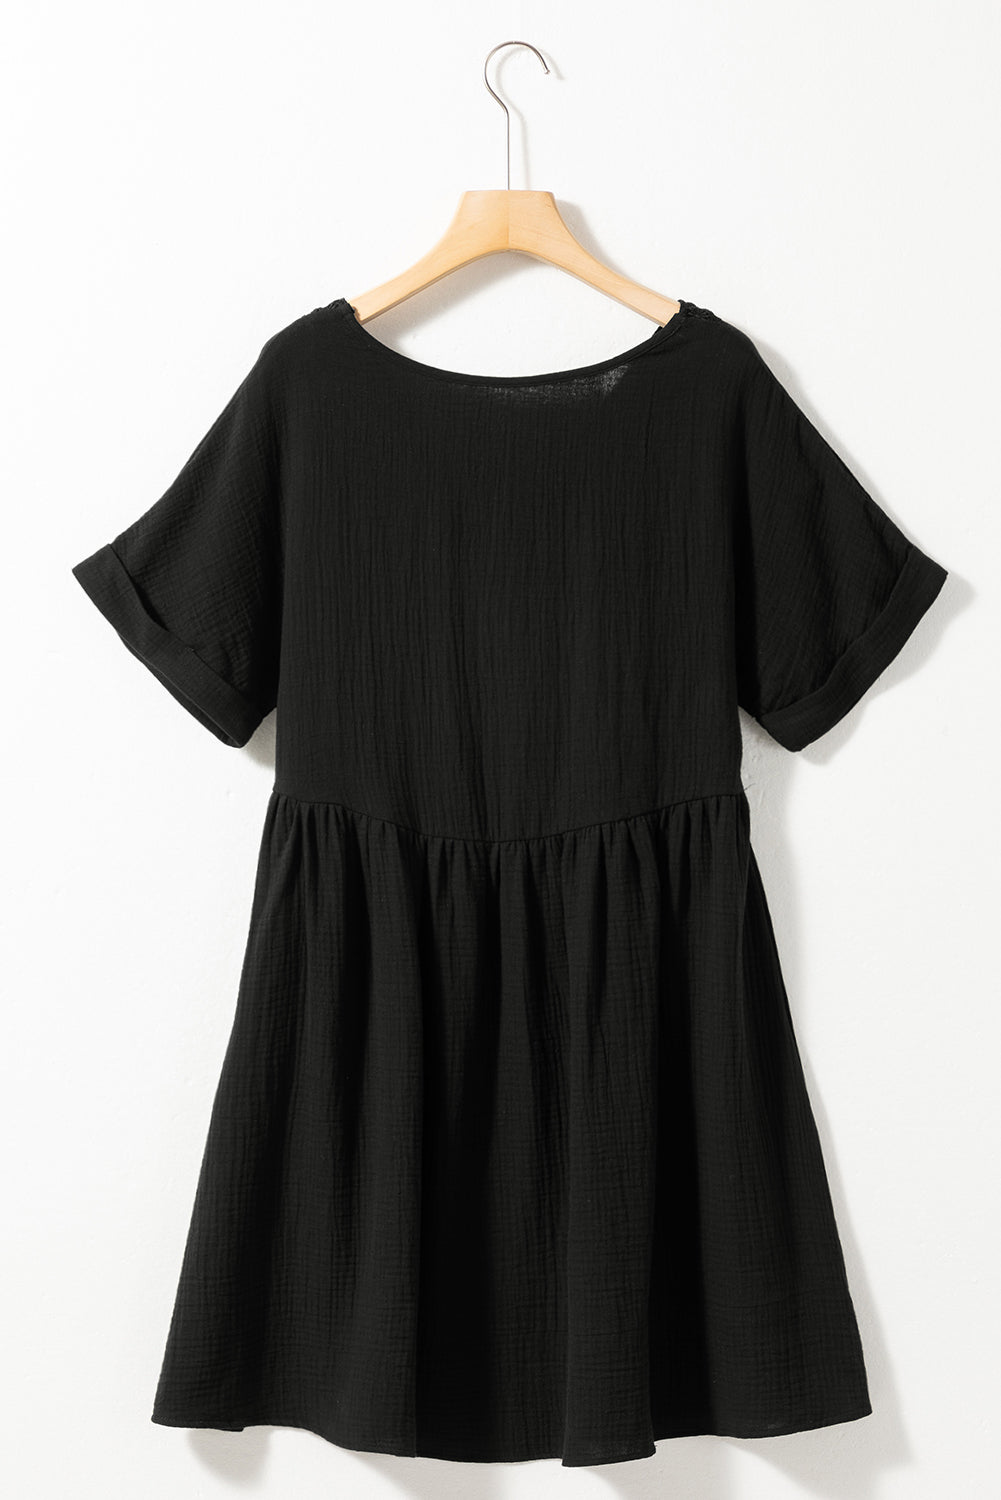 Beige Mini Boho Dress with Sleeves | Lace Empire Waist Mini Dress